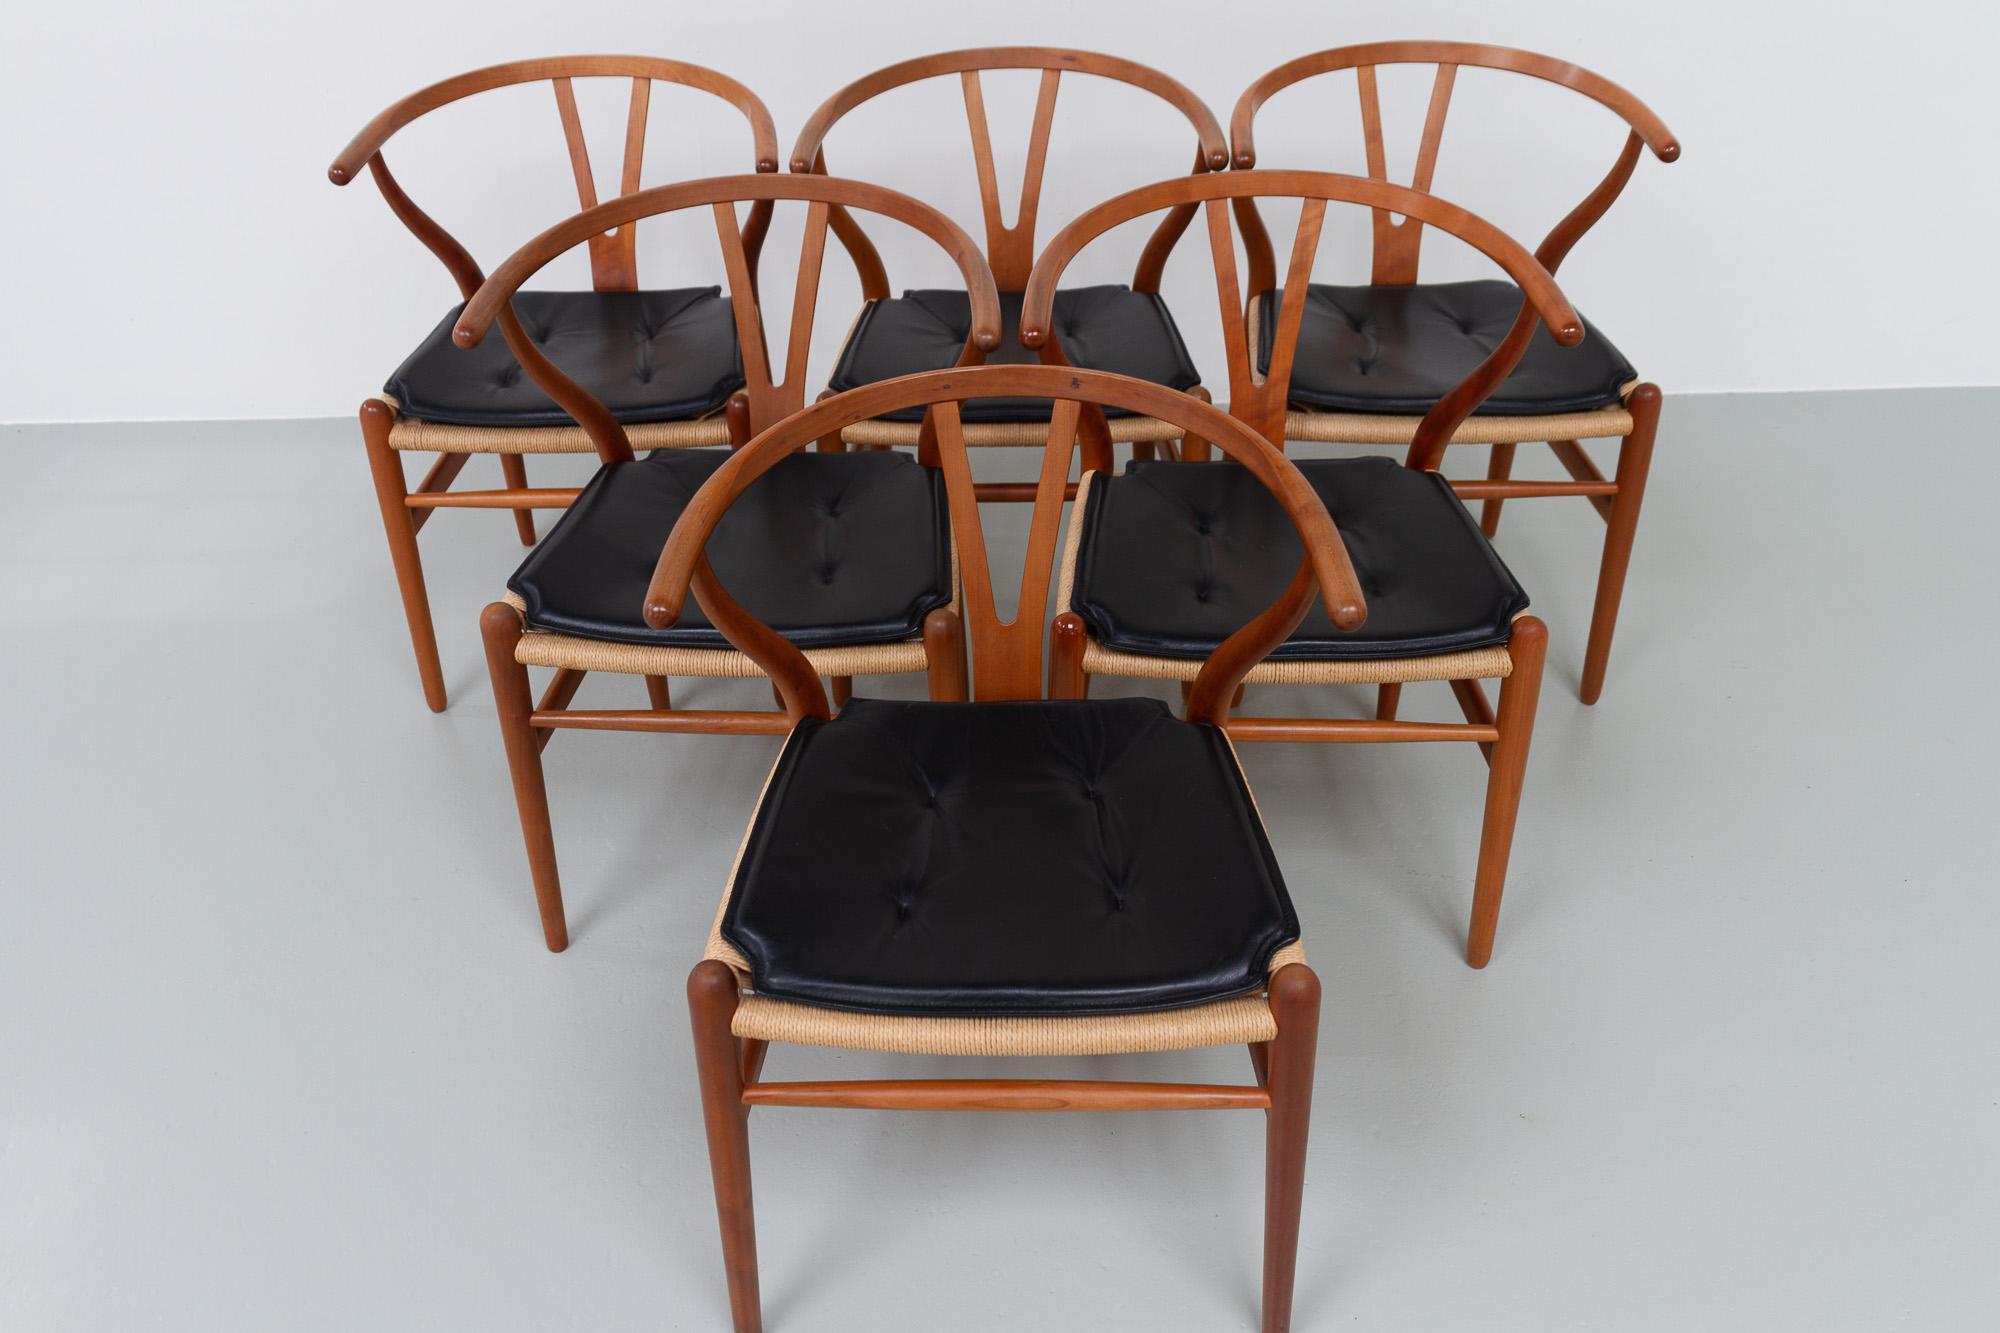 Danish Modern Cherry CH24 Wishbone Chairs by Hans J. Wegner, 1990s.

Designed in 1949 by Danish designer Hans Jørgensen Wegner for Carl Hansen & Søn, Denmark. Also known as the Y Chair.
Set of six iconic Scandinavian modern dining chairs in